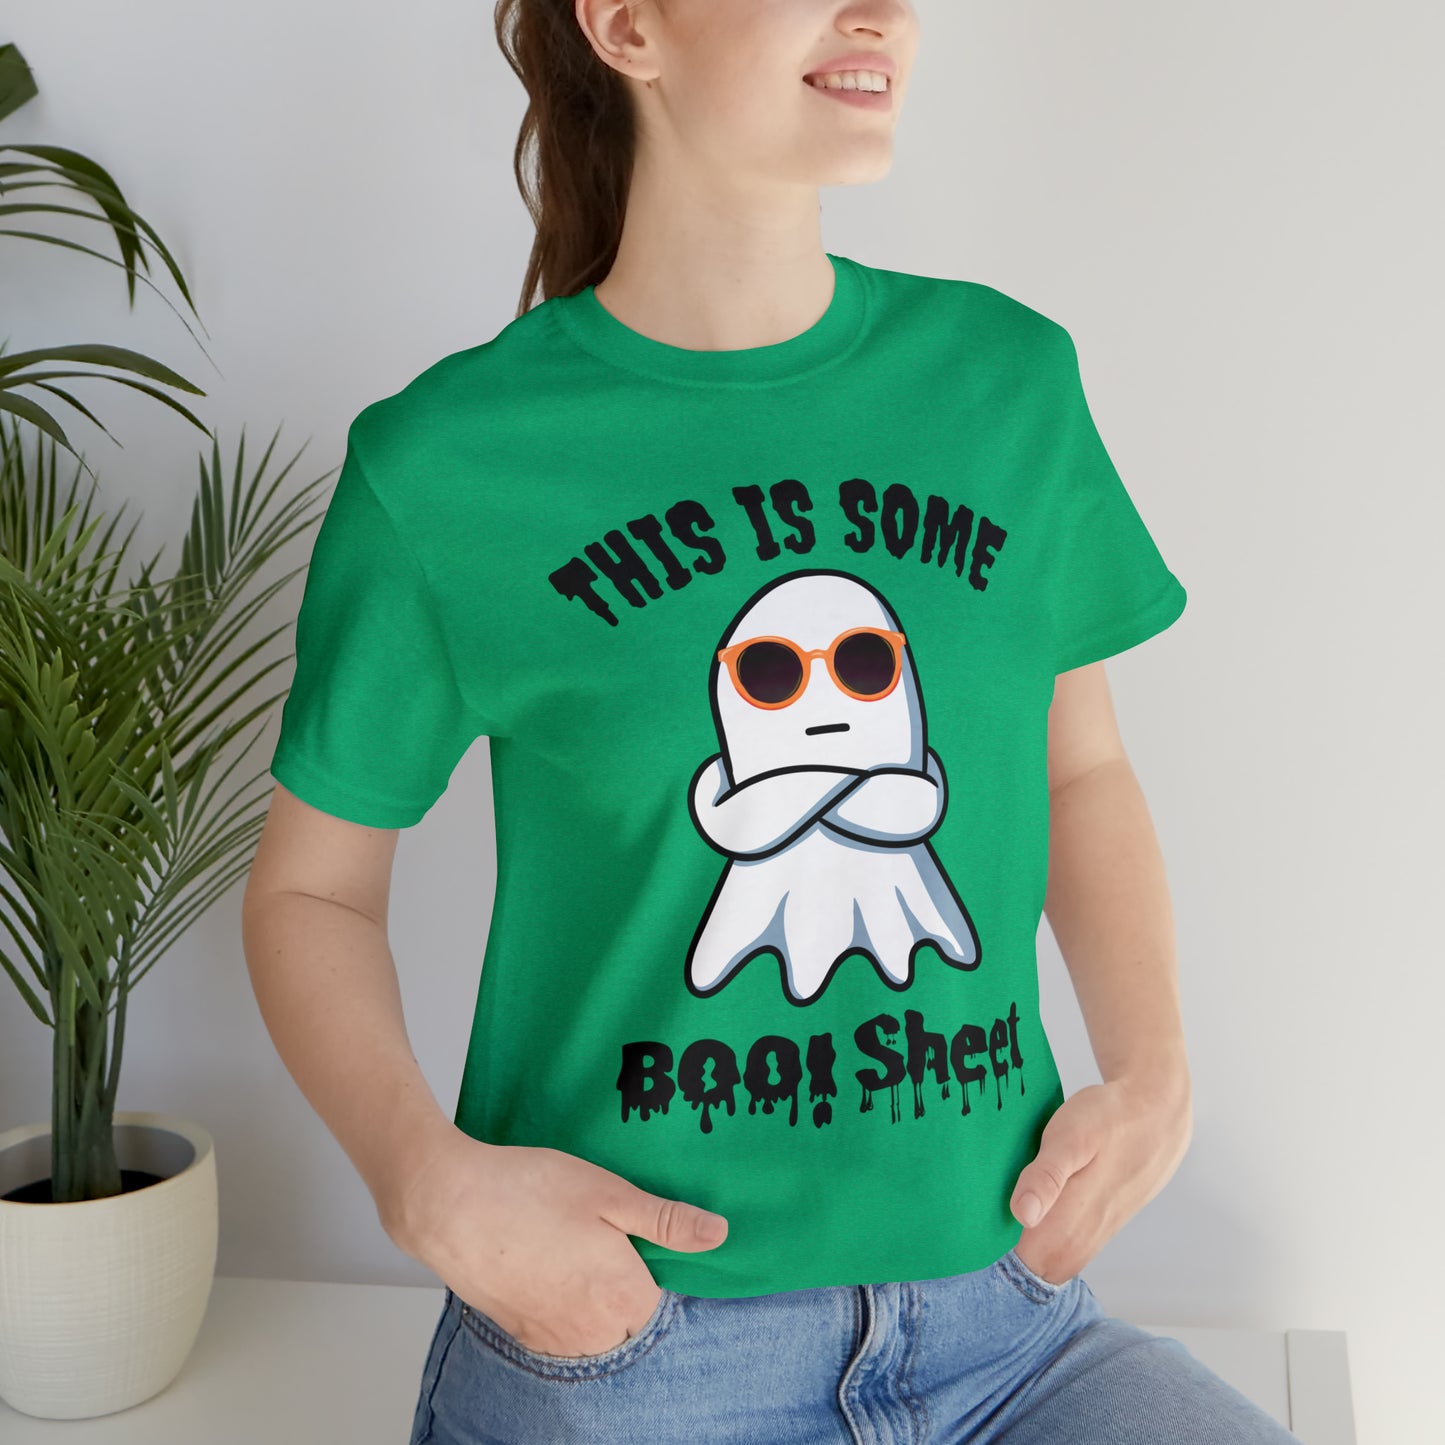 This Is Some Boo Sheet Funny Halloween Shirt Funny Halloween Costume Spooky Season Tee Funny Gift Shirt for Birthday Christmas Anniversary